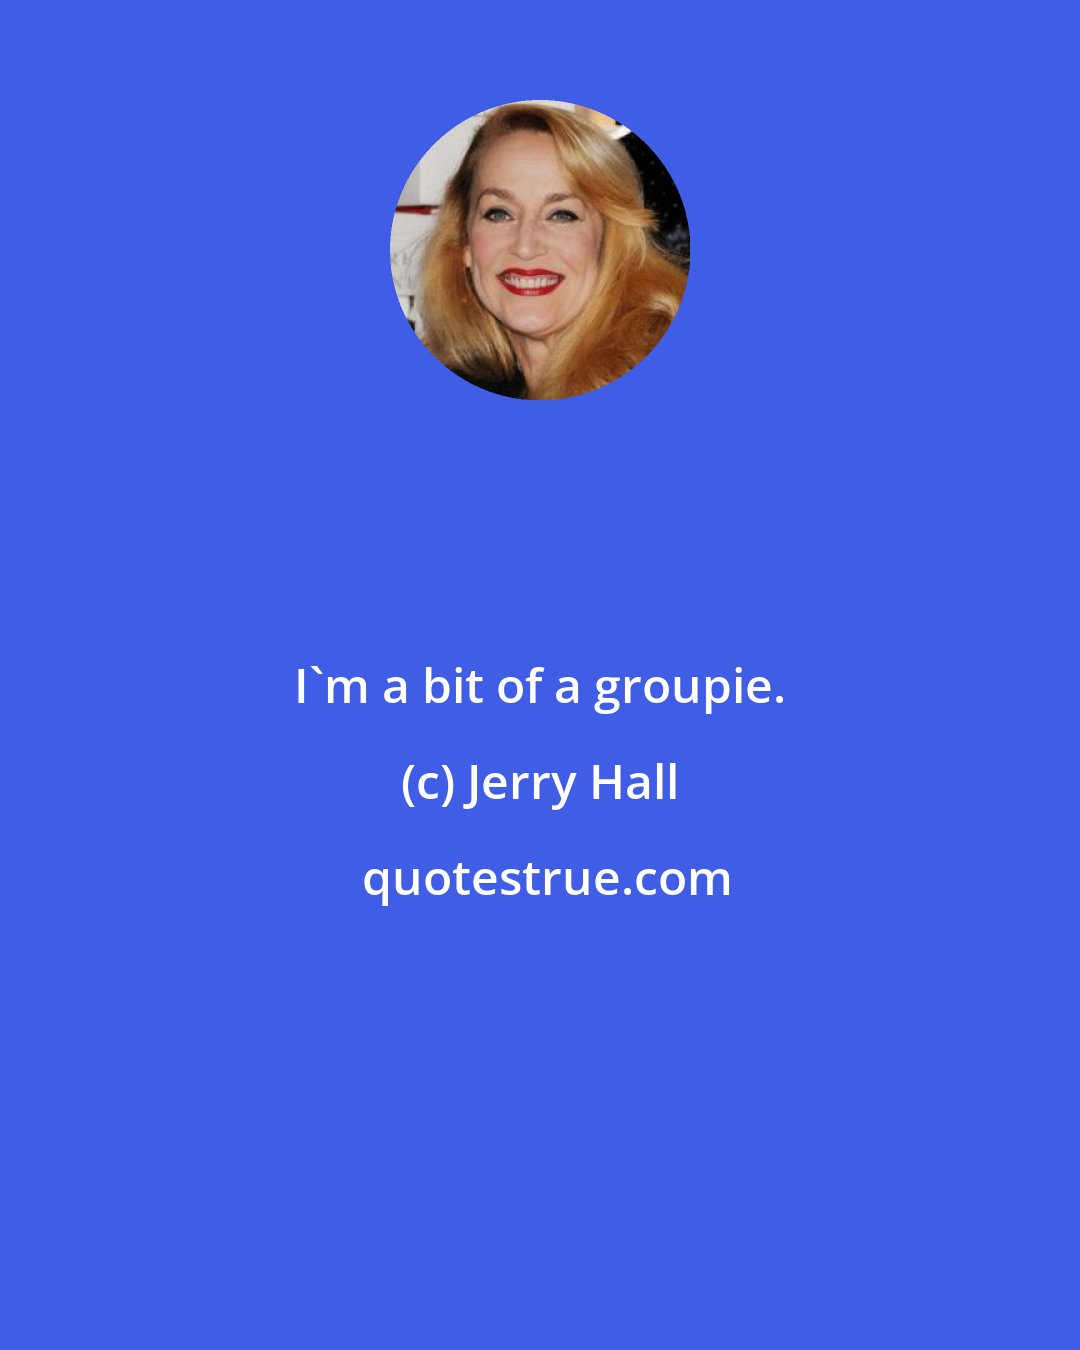 Jerry Hall: I'm a bit of a groupie.